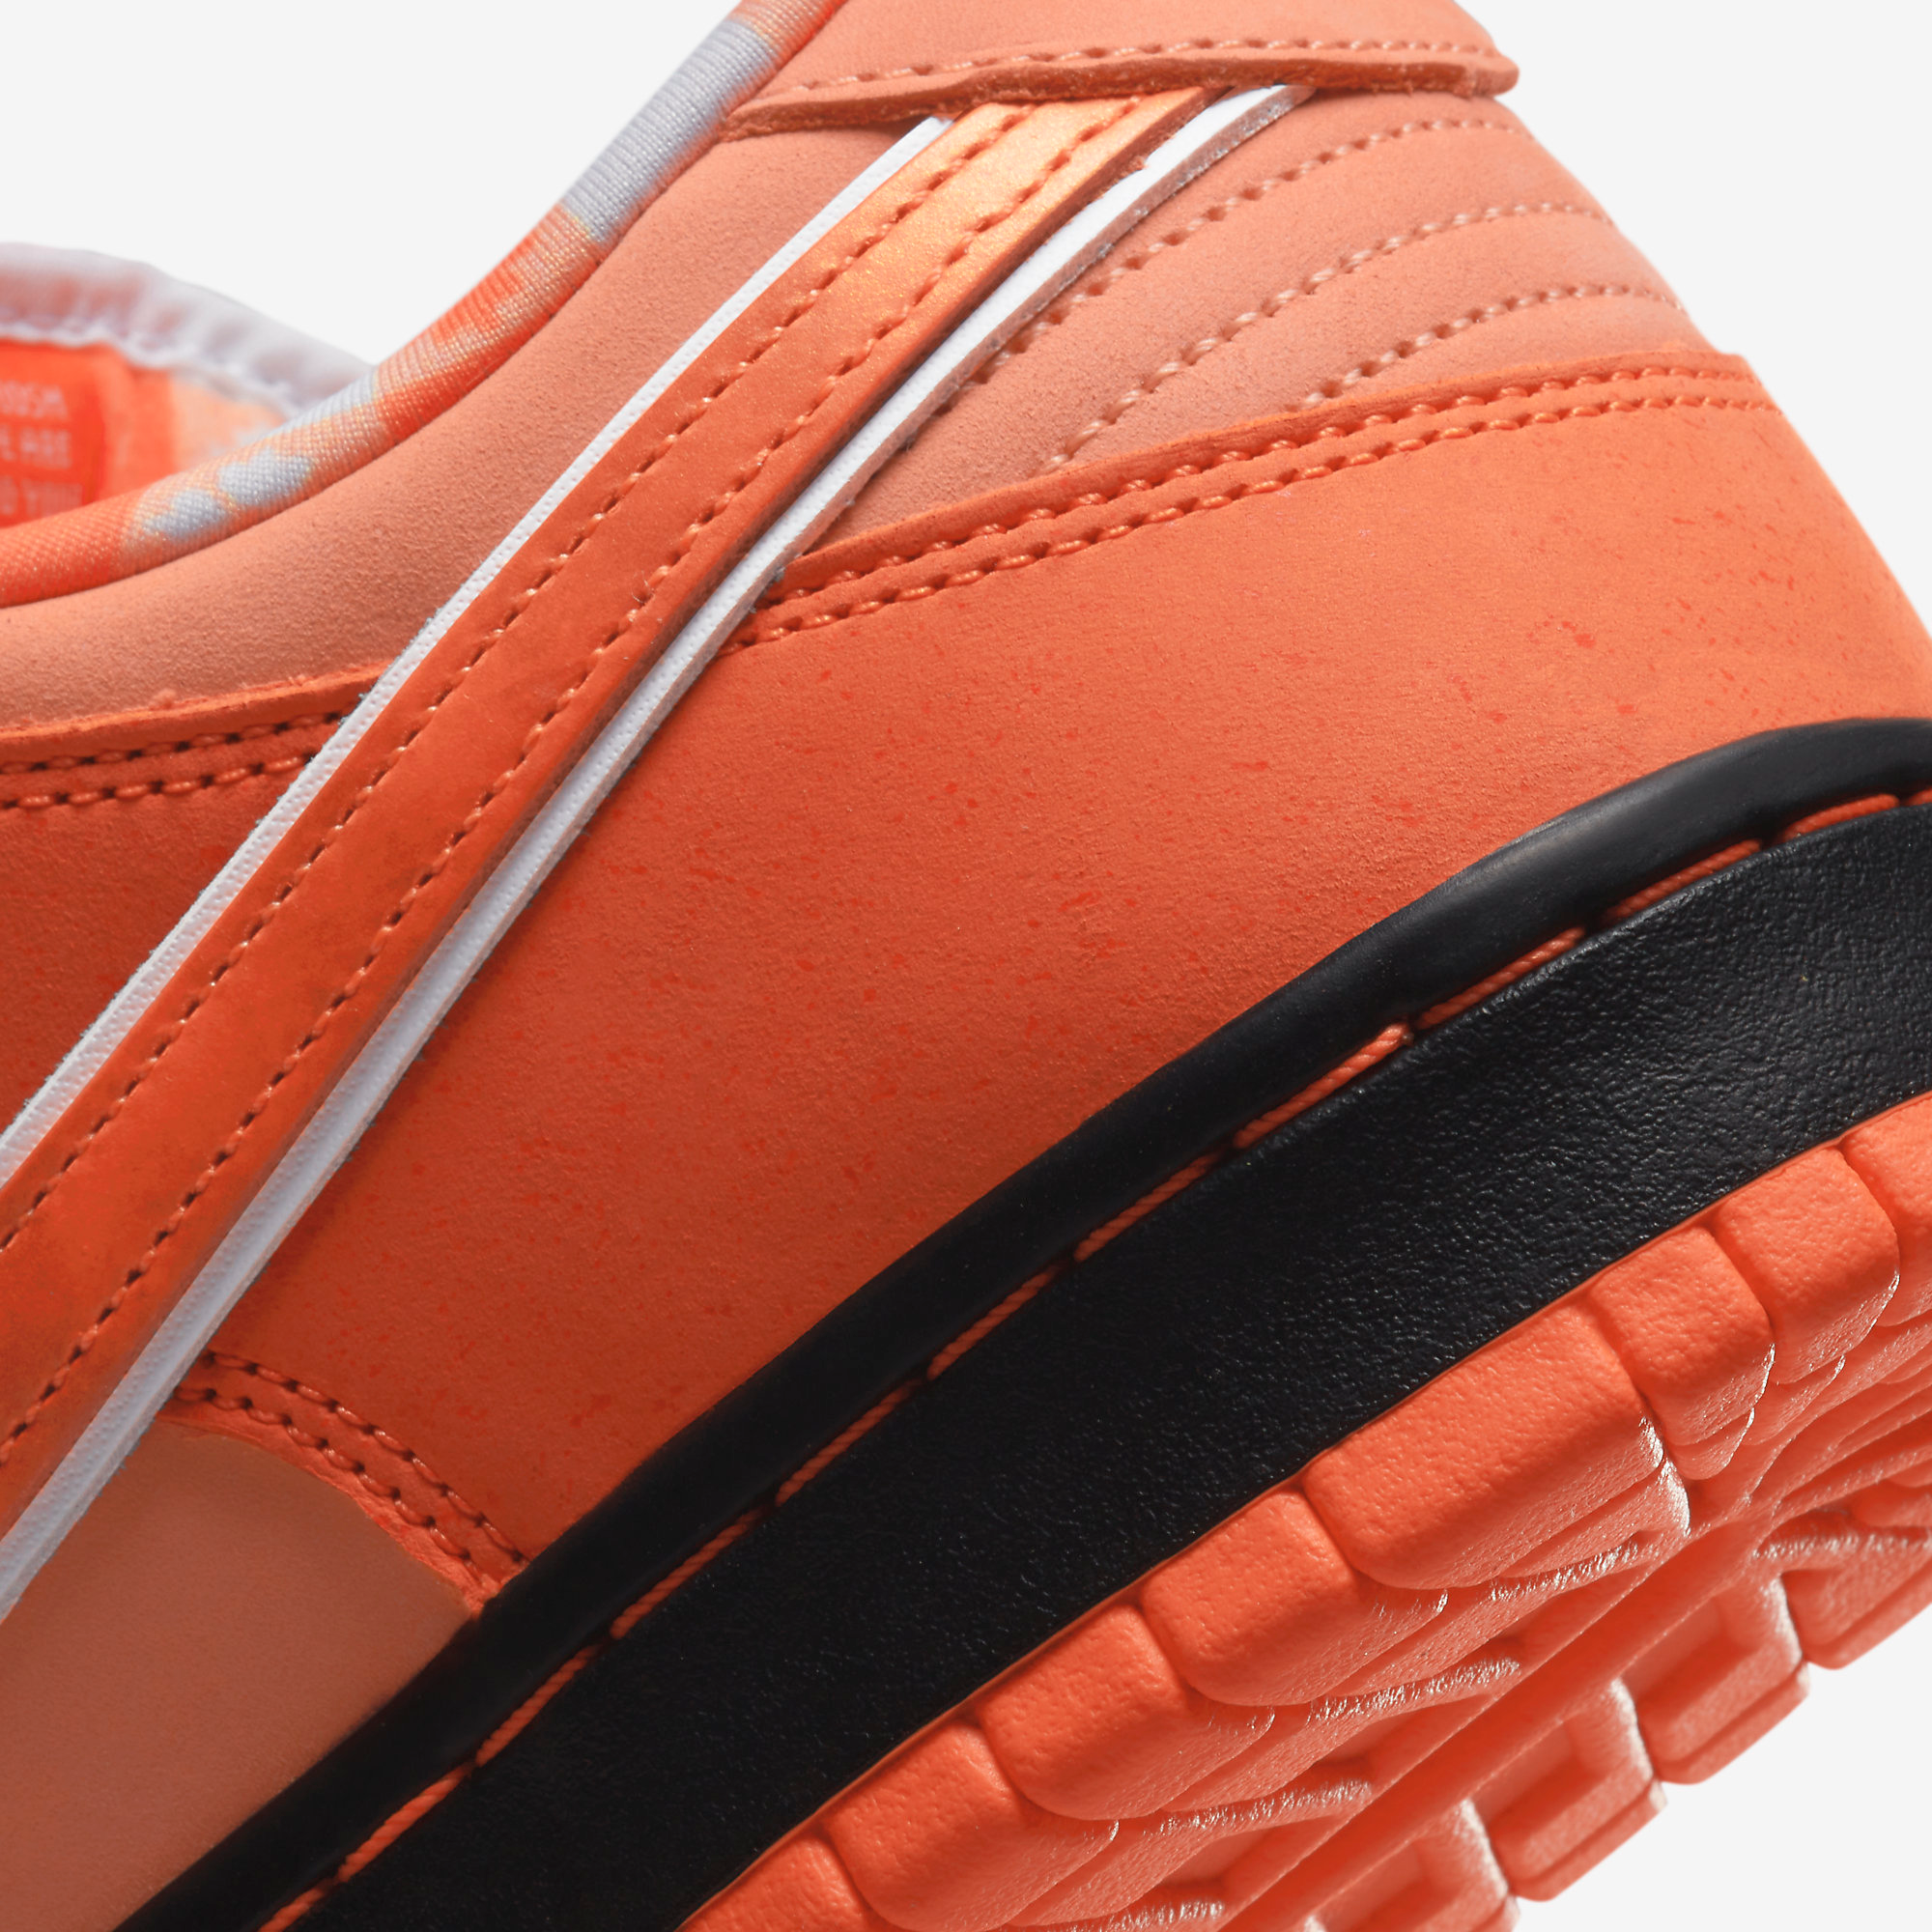 Nike Sneakers, SB Dunk Low ‘Concepts Orange Lobster’